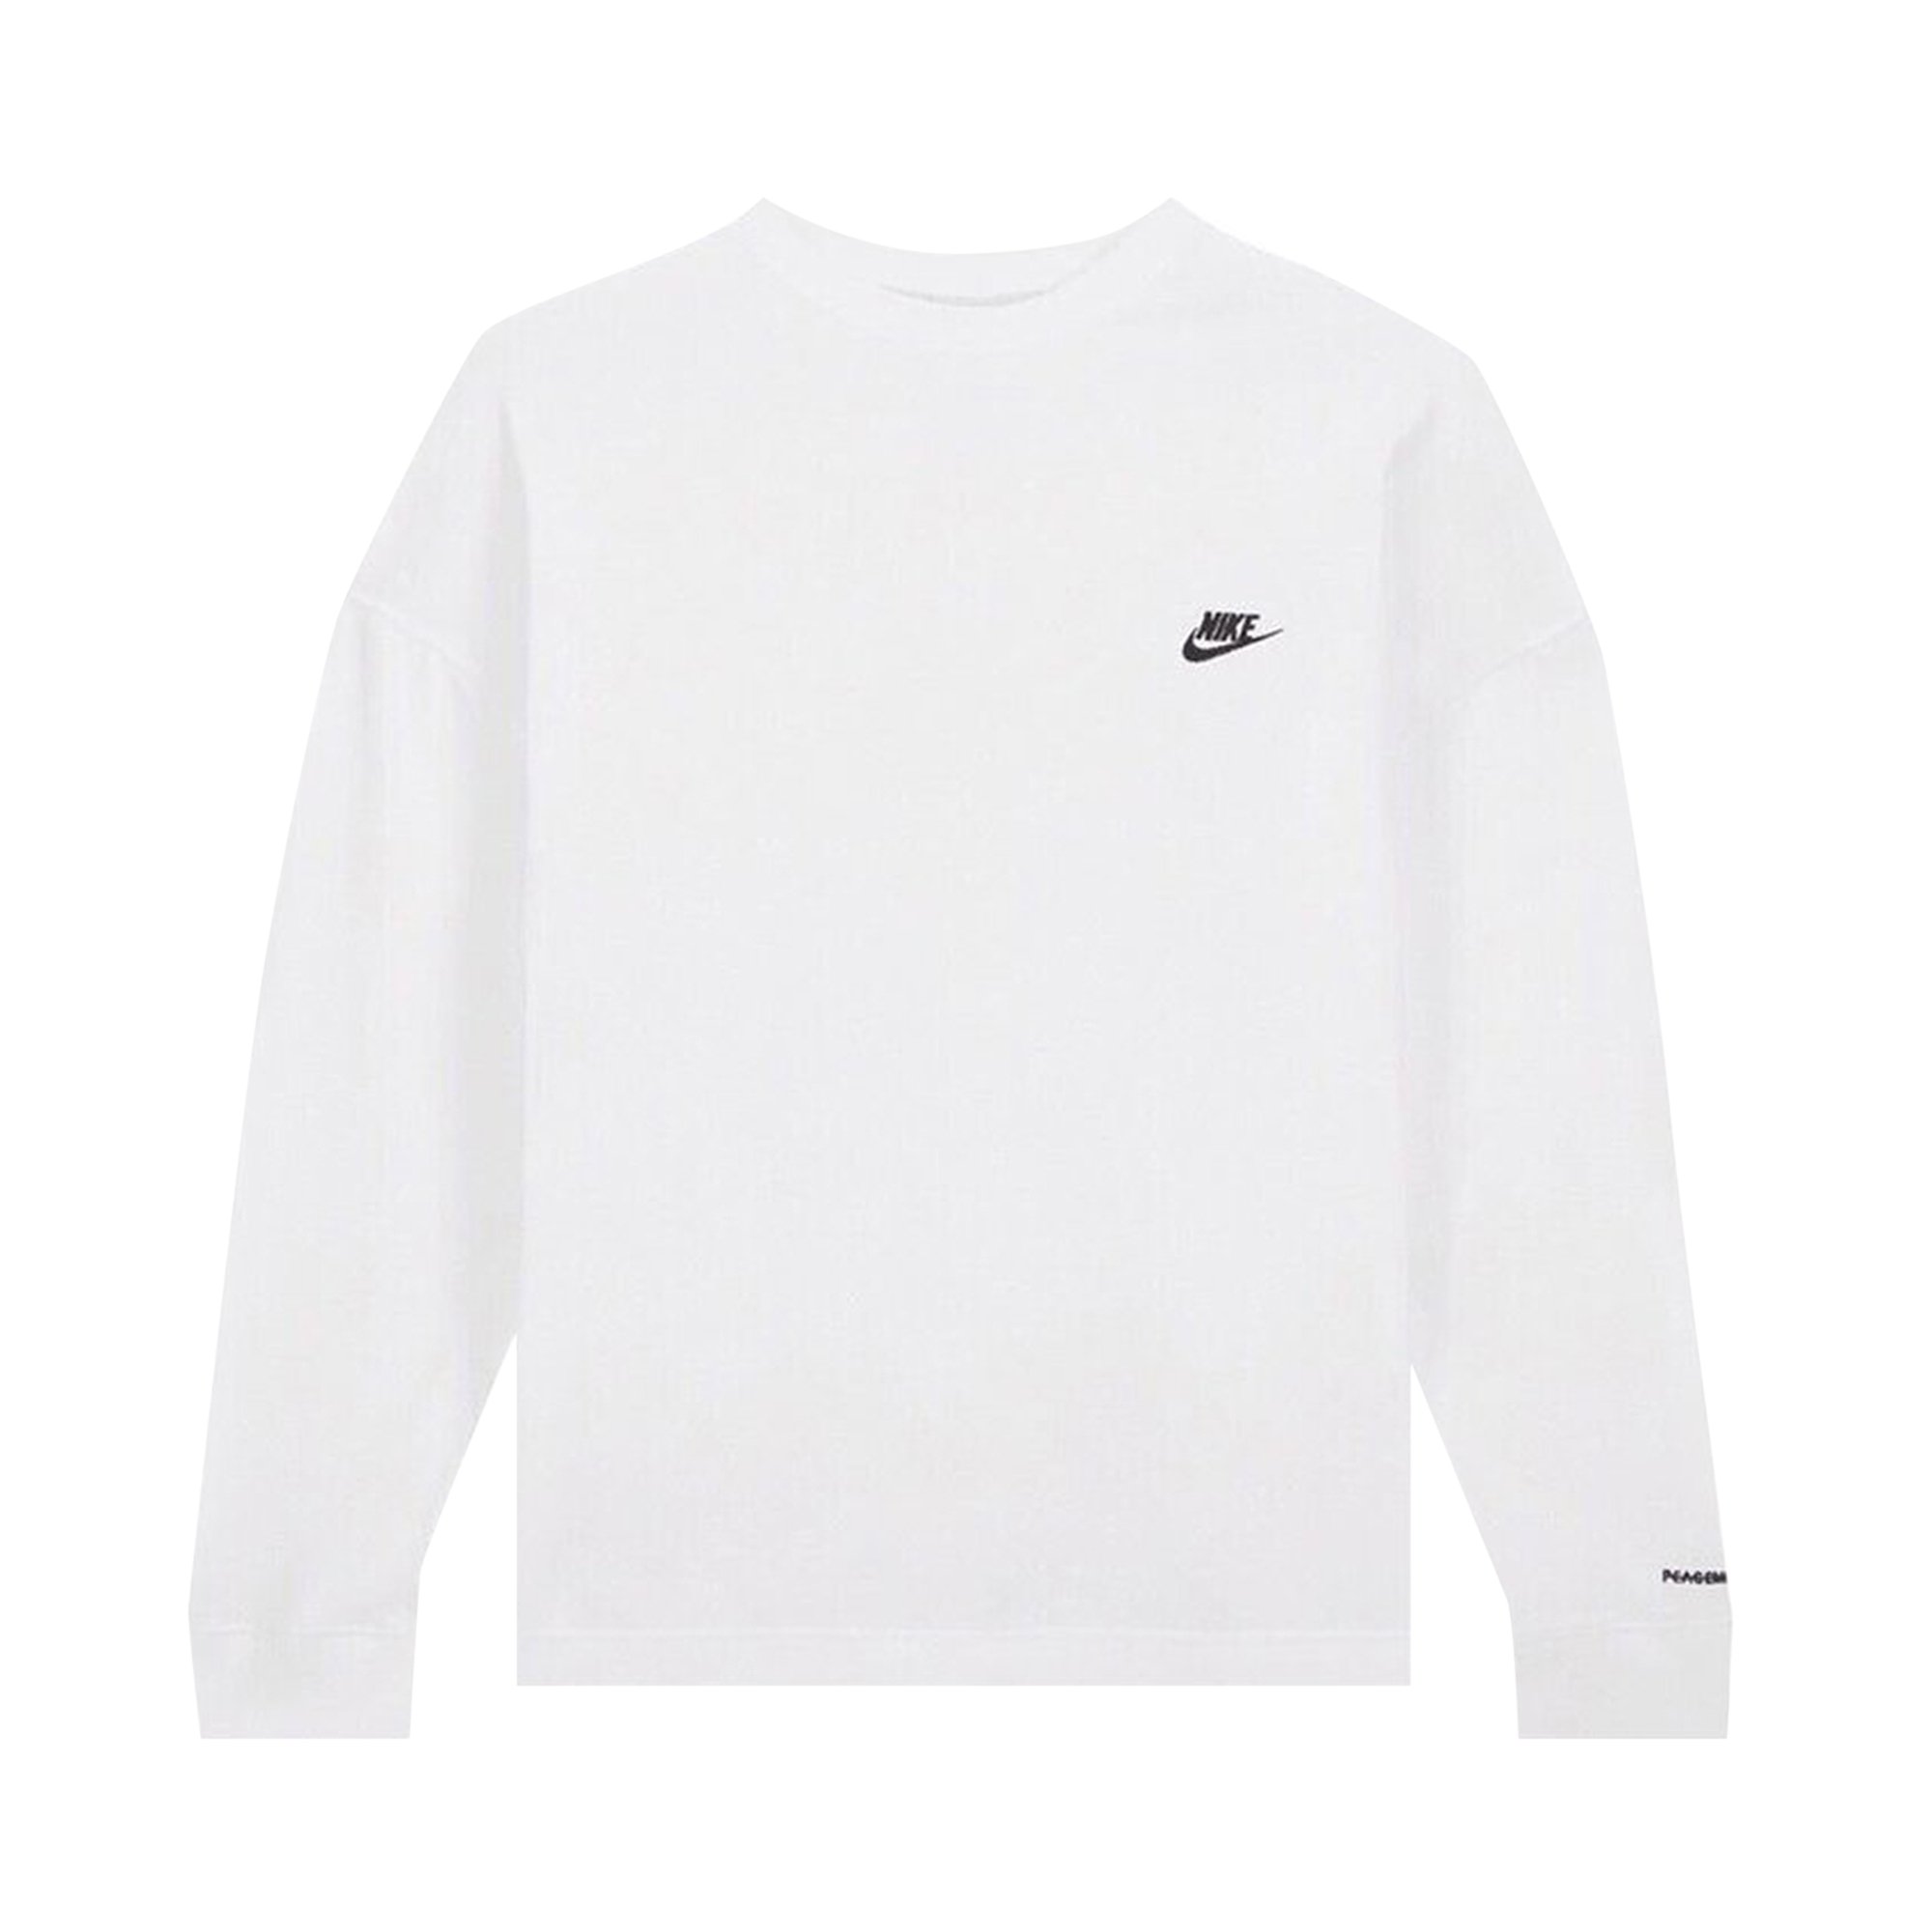 Buy Nike x PEACEMINUSONE G-Dragon Long-Sleeve T-Shirt (Asia Sizing